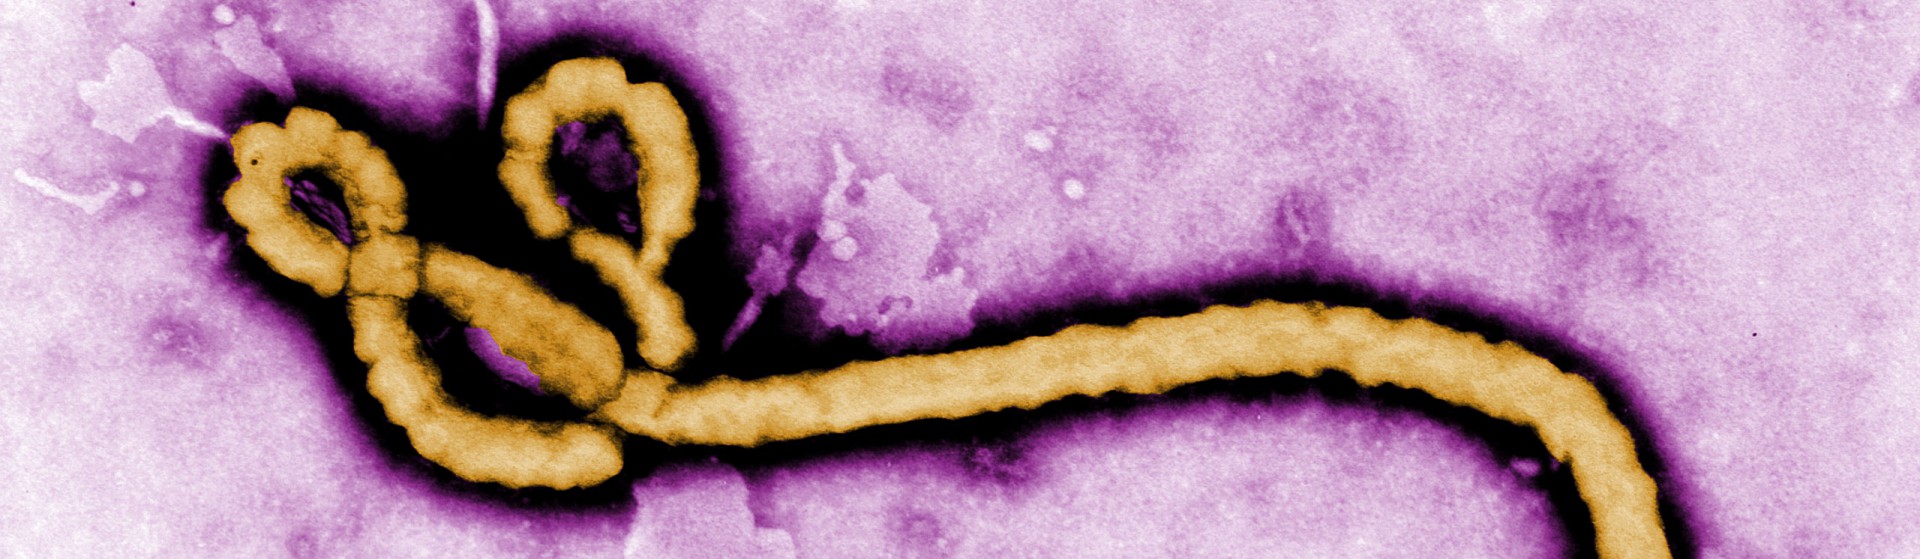 Ebola-Virus.